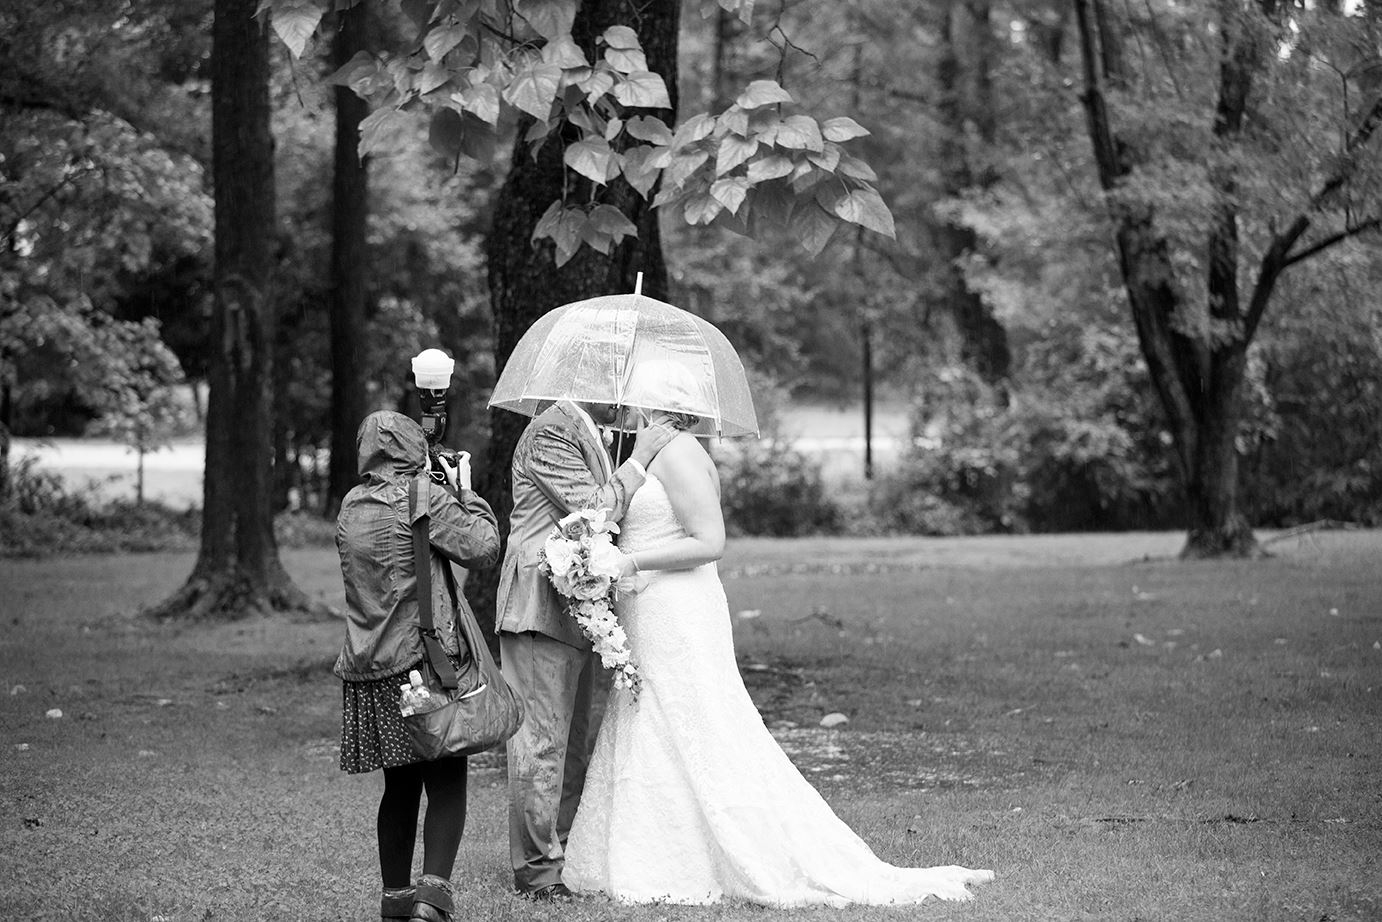 How to Rock a Rainy Wedding day - Image Property of www.j-dphoto.com